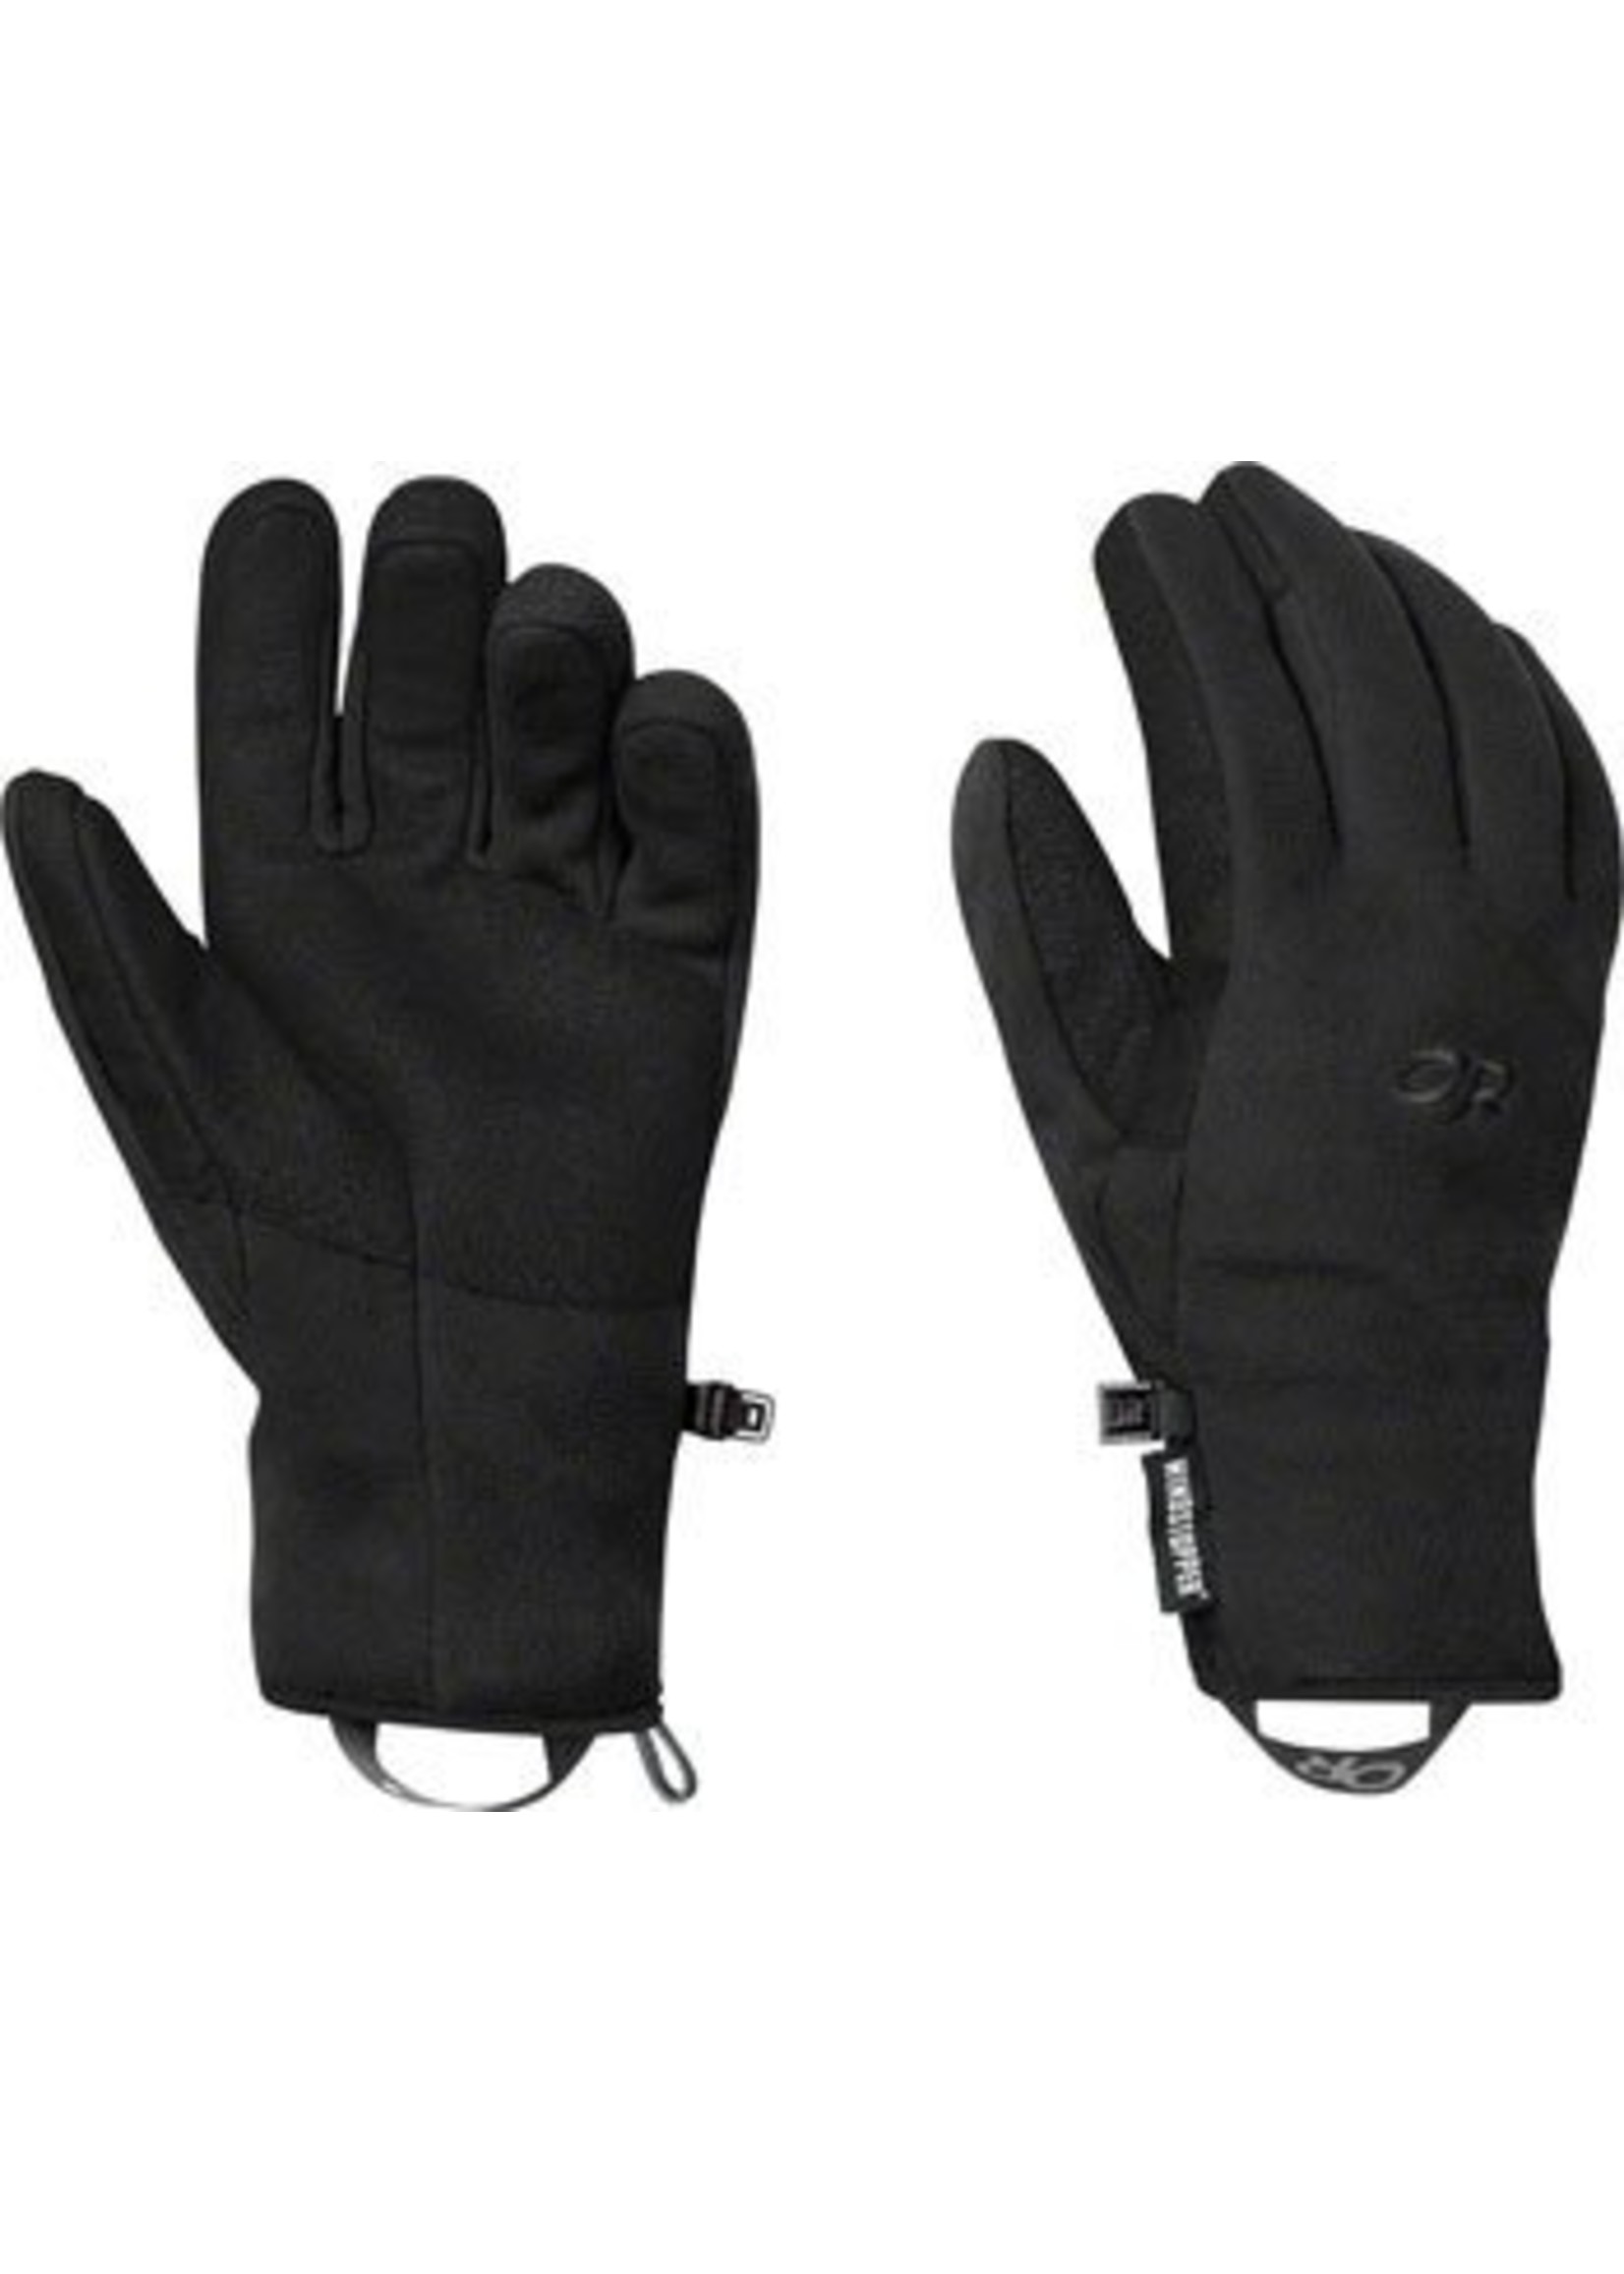 Outdoor Research Gripper Women's Gloves: Black, SM